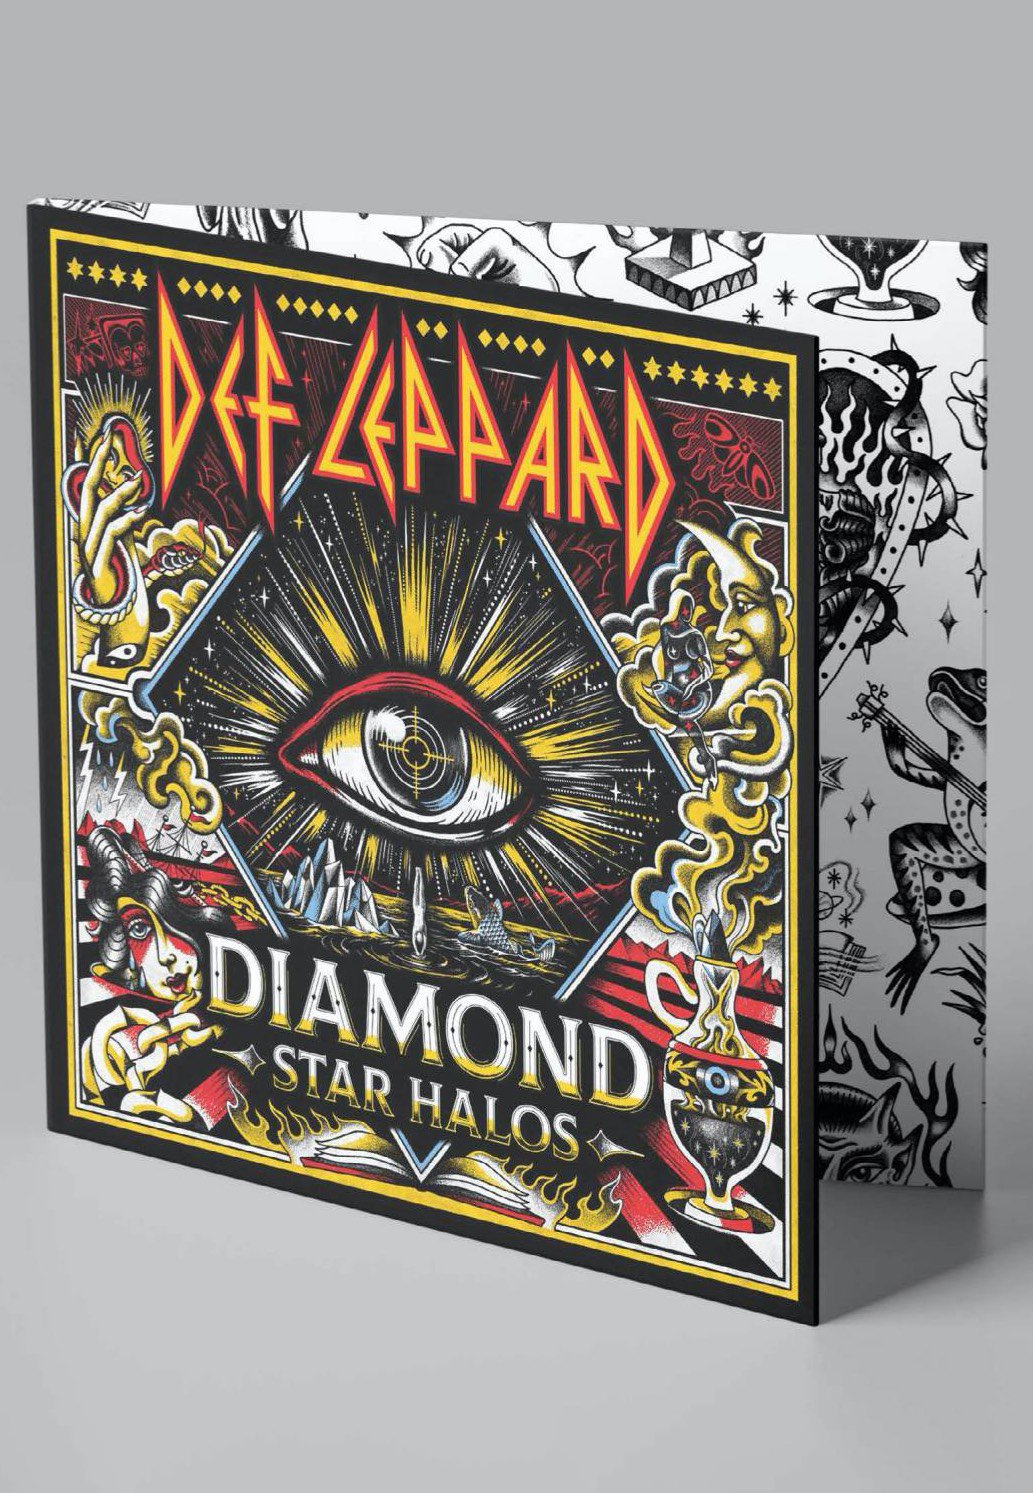 Def Leppard - Diamond Star Halos Ltd. Deluxe - Digipak CD